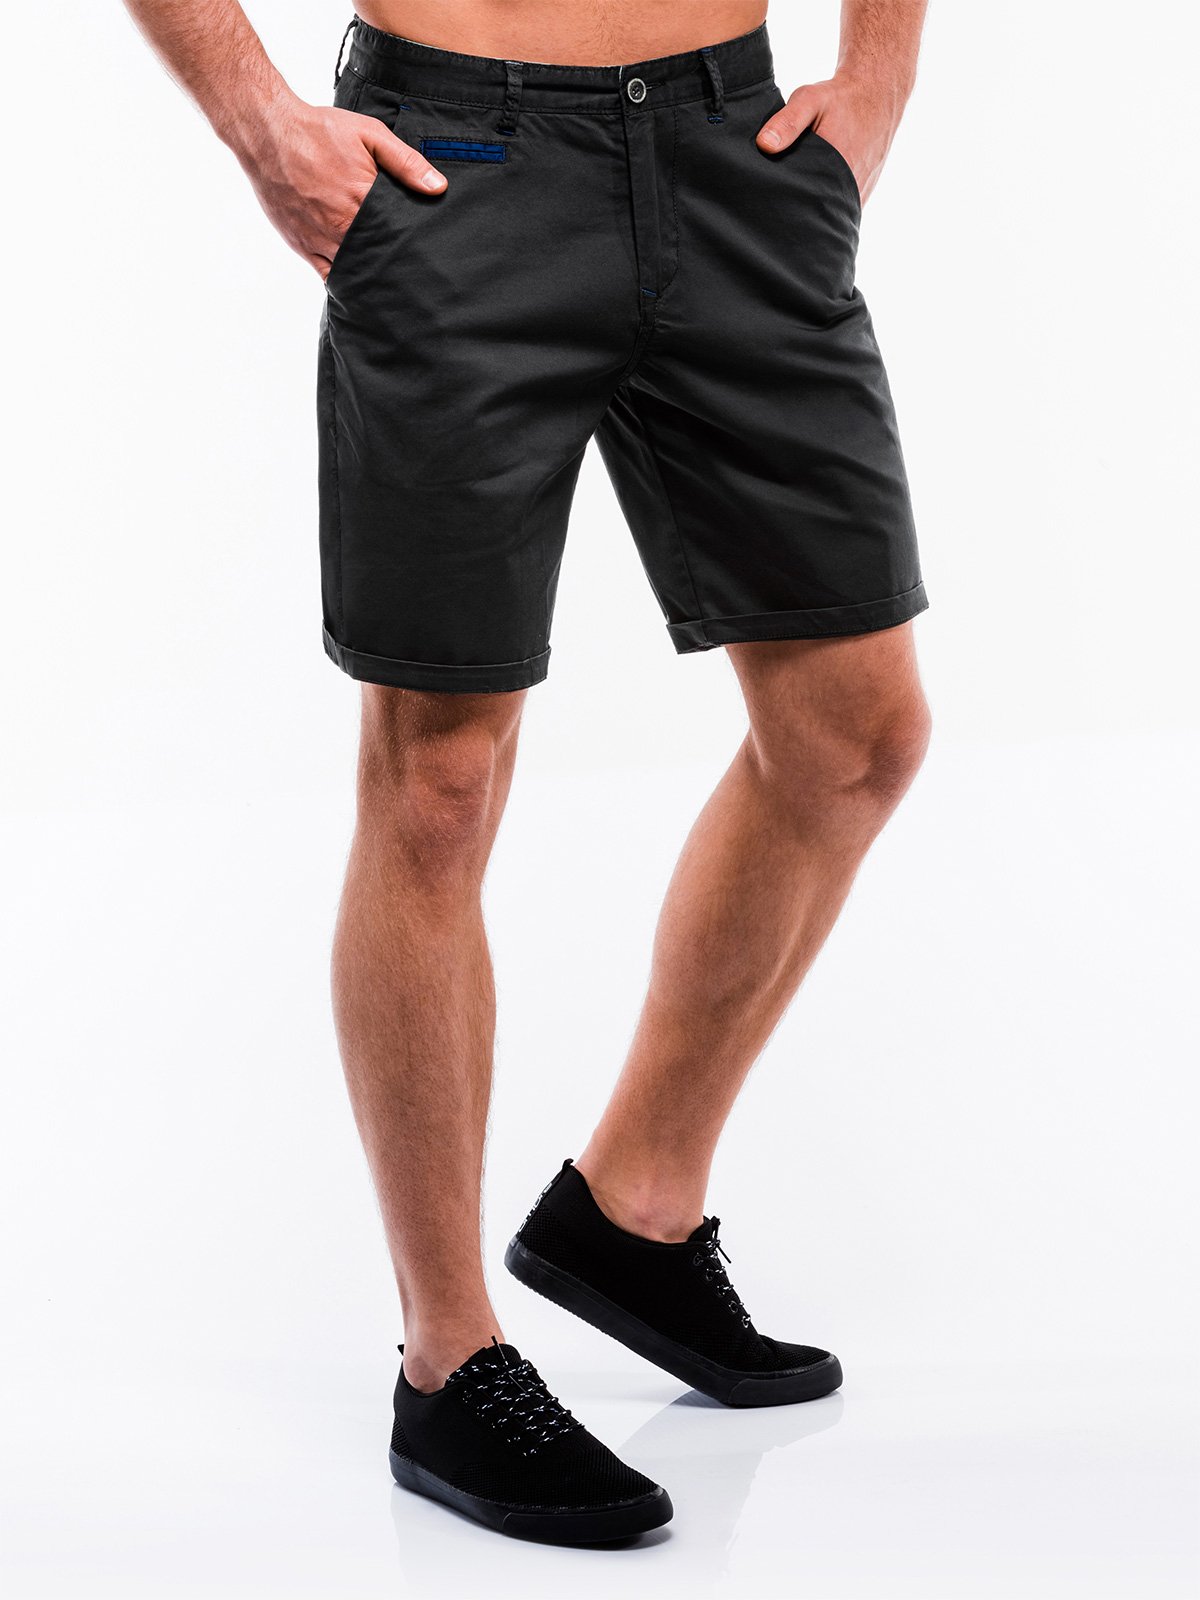 Men's casual shorts W207 - black | MODONE wholesale - Clothing For Men